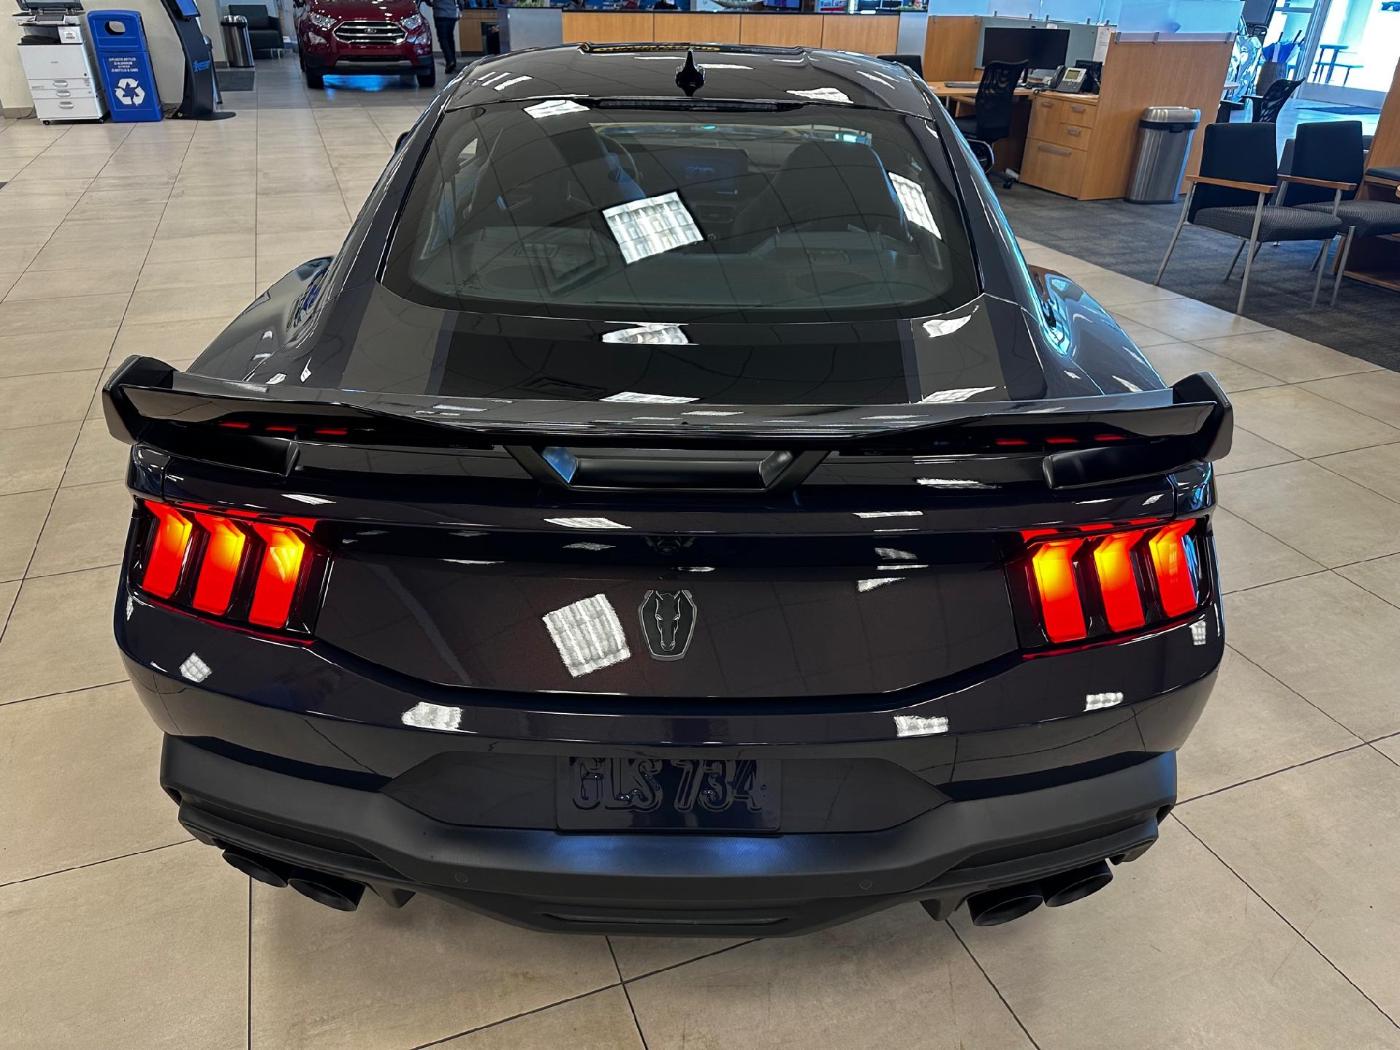 S650 Mustang 2024 Dark Horse on display at dealer "For Sale" (Blue Ember) 32180517413x1400